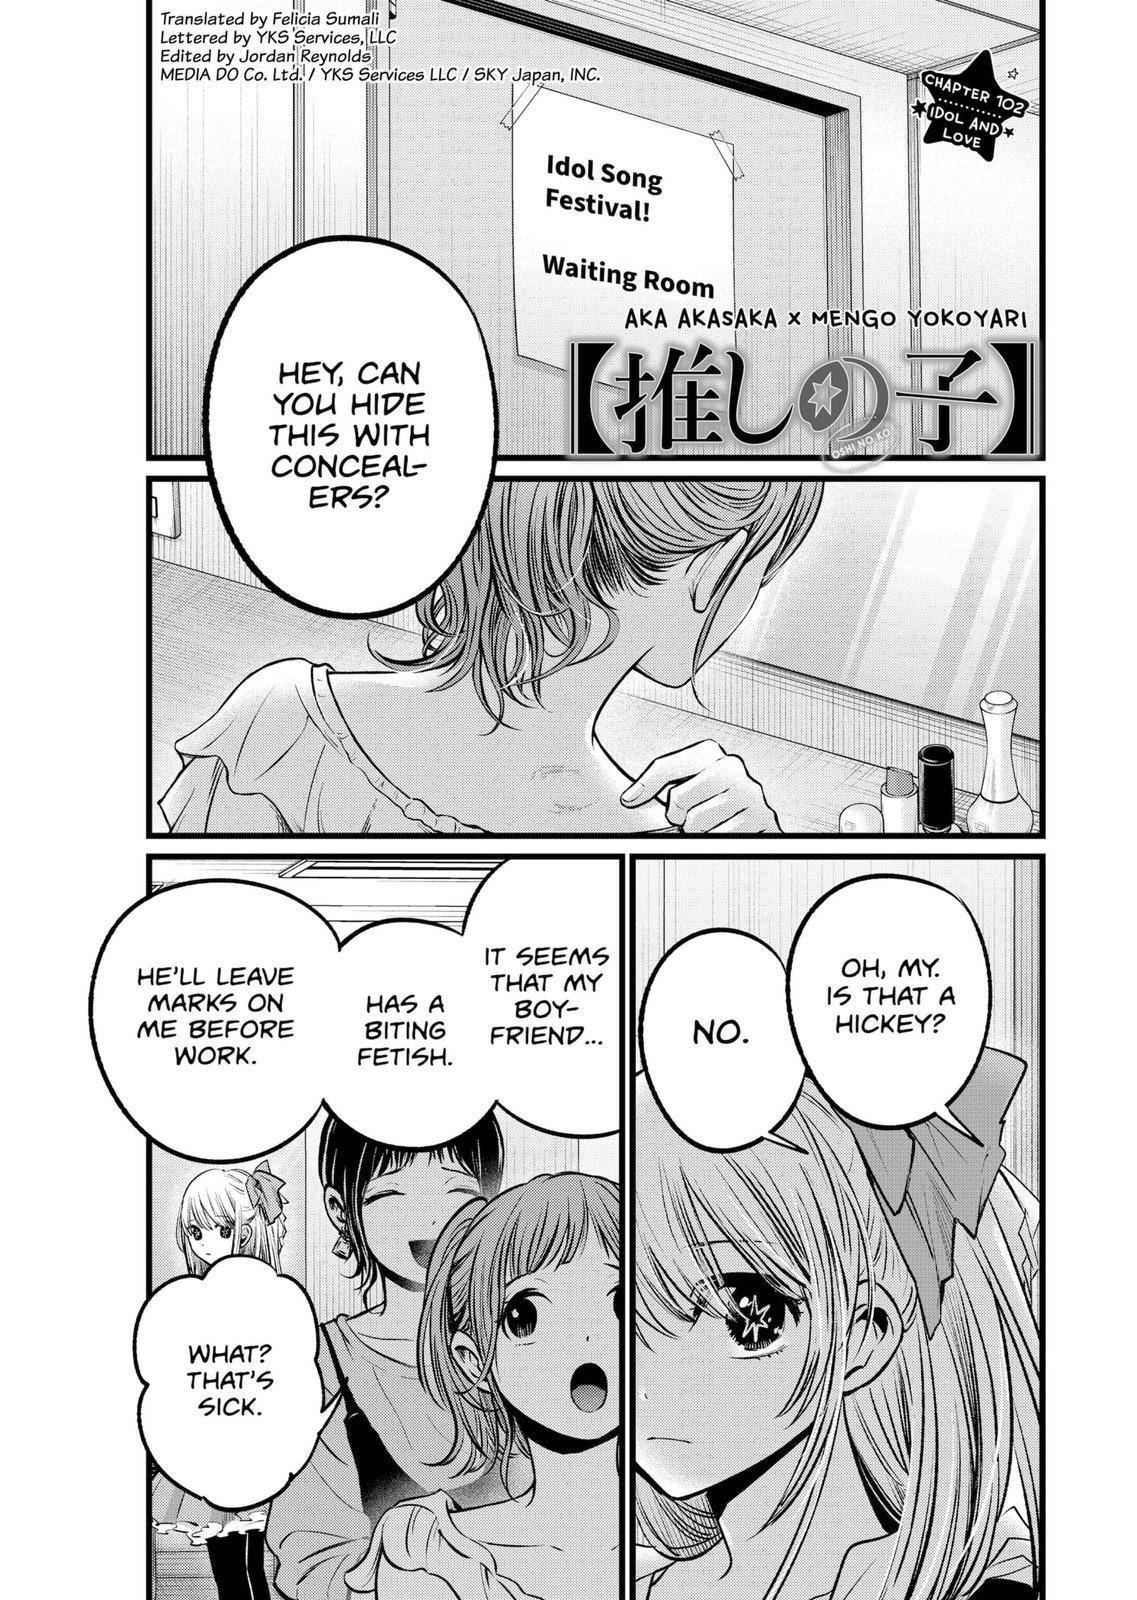 OSHI NO KO Chapter 107 - Friends - READ OSHI NO KO Manga Online